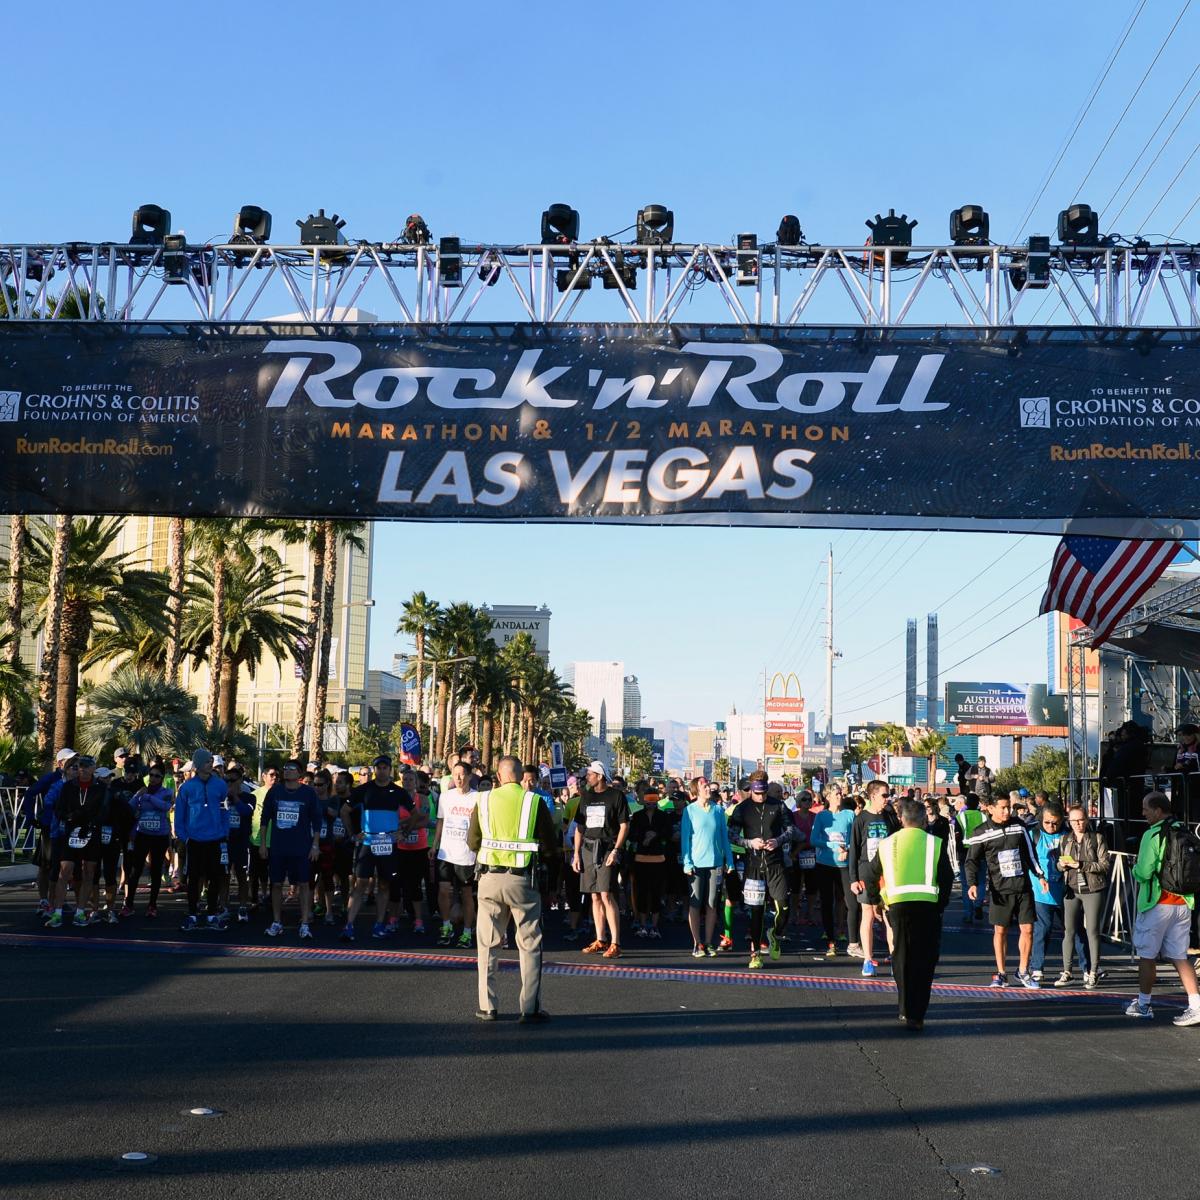 Las Vegas Marathon Results 2016 Men's and Women's Top Finishers